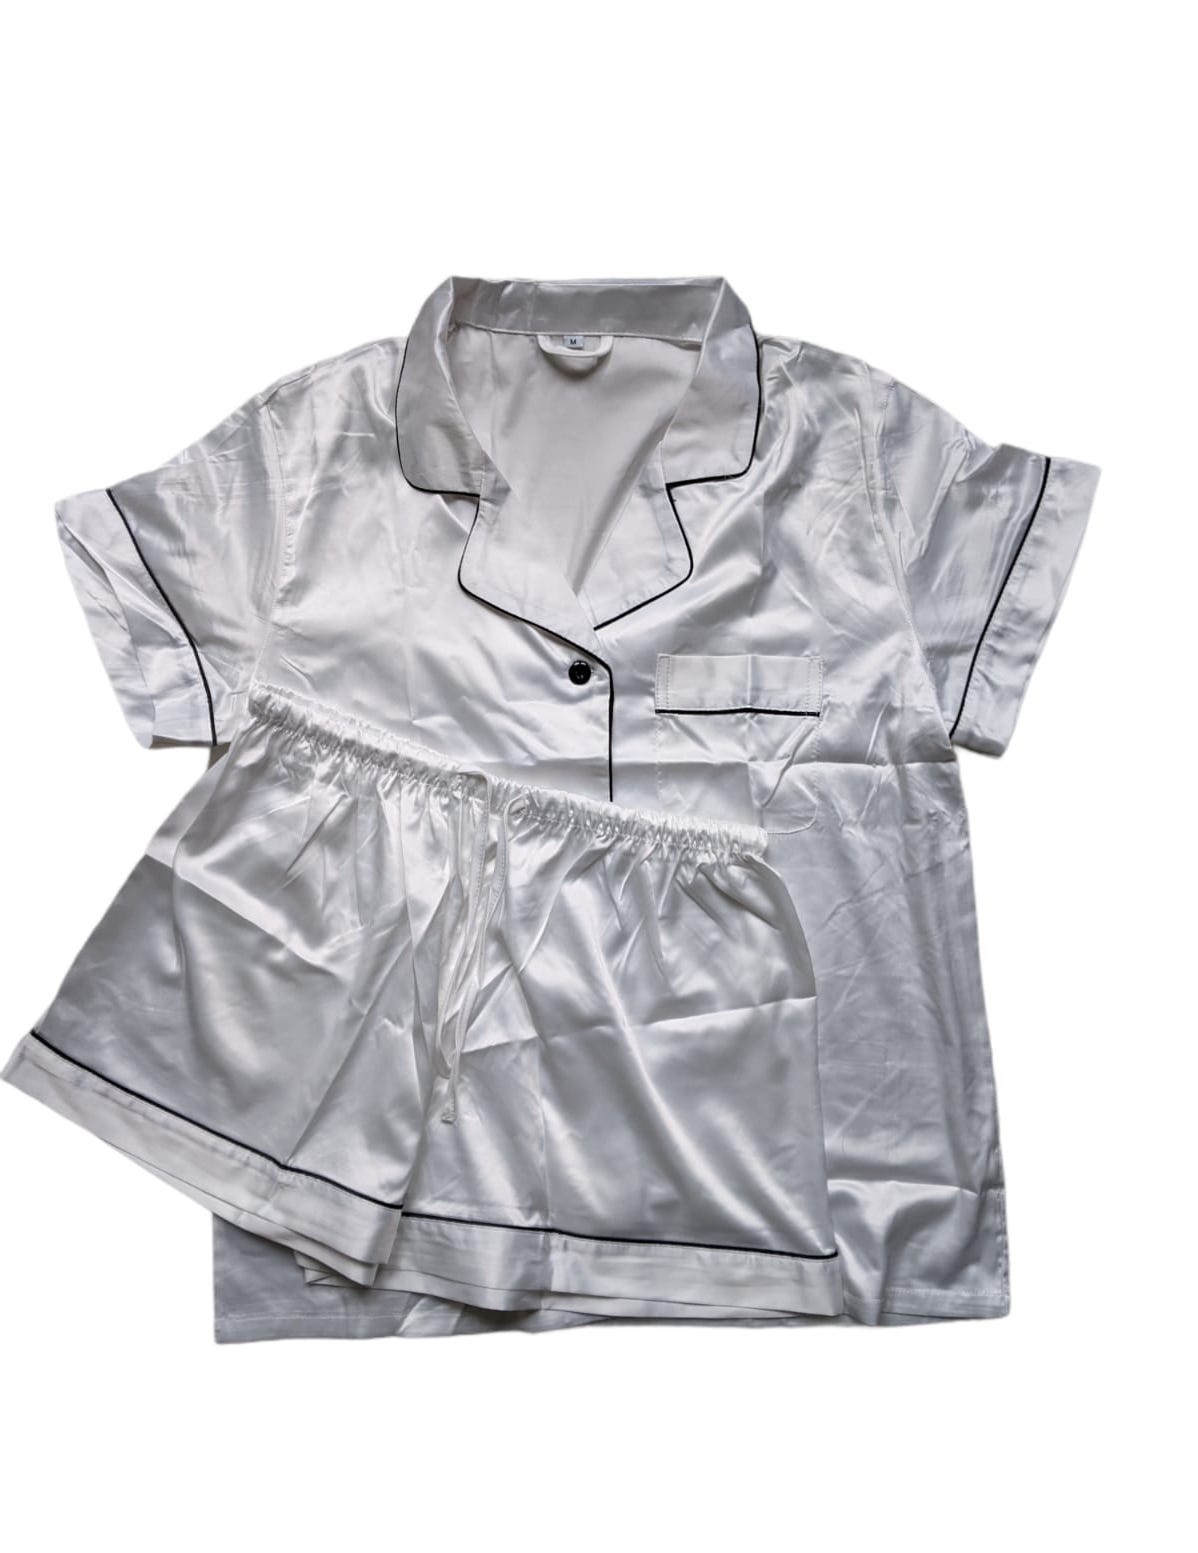 Satin Personalised Pyjama Set - White and Black